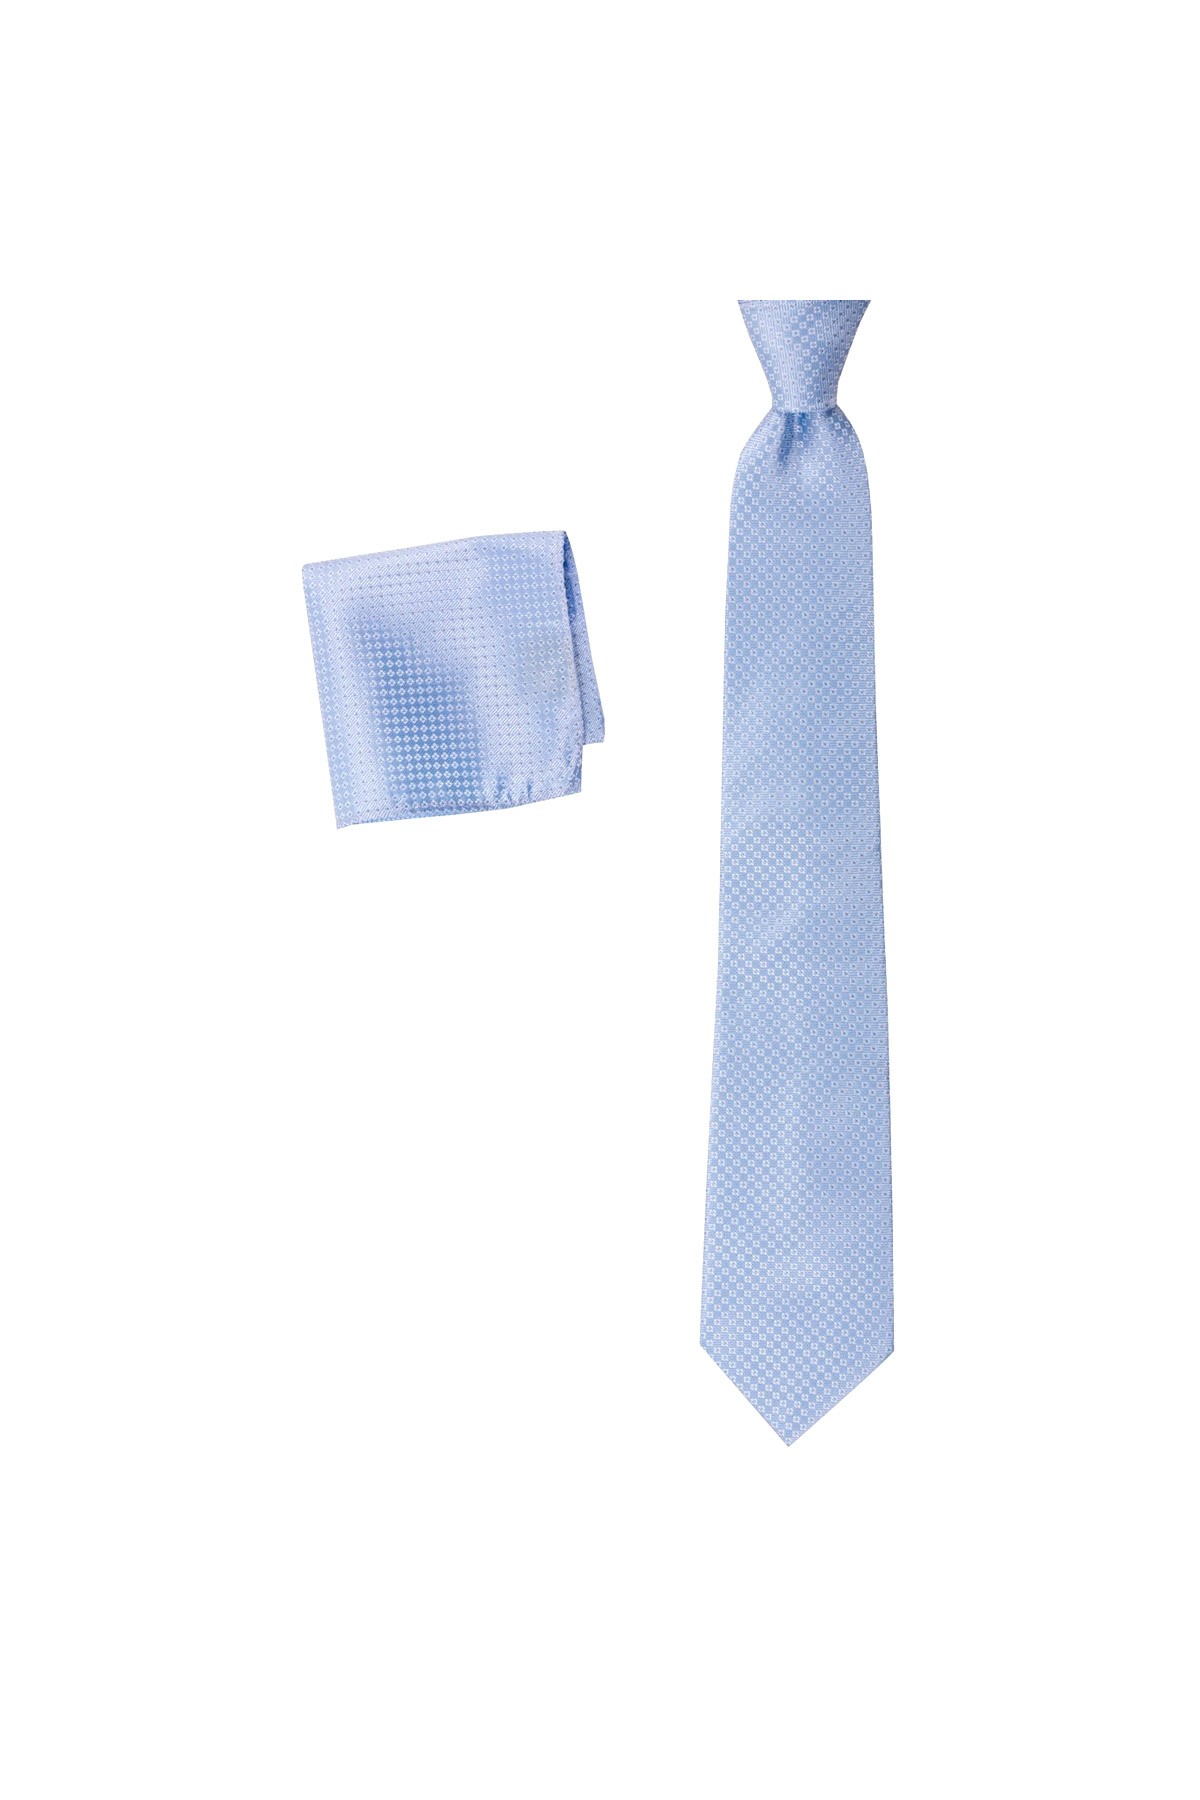 Düz renkli 8 cm genişliğinde mendilli kravat - Açık mavi